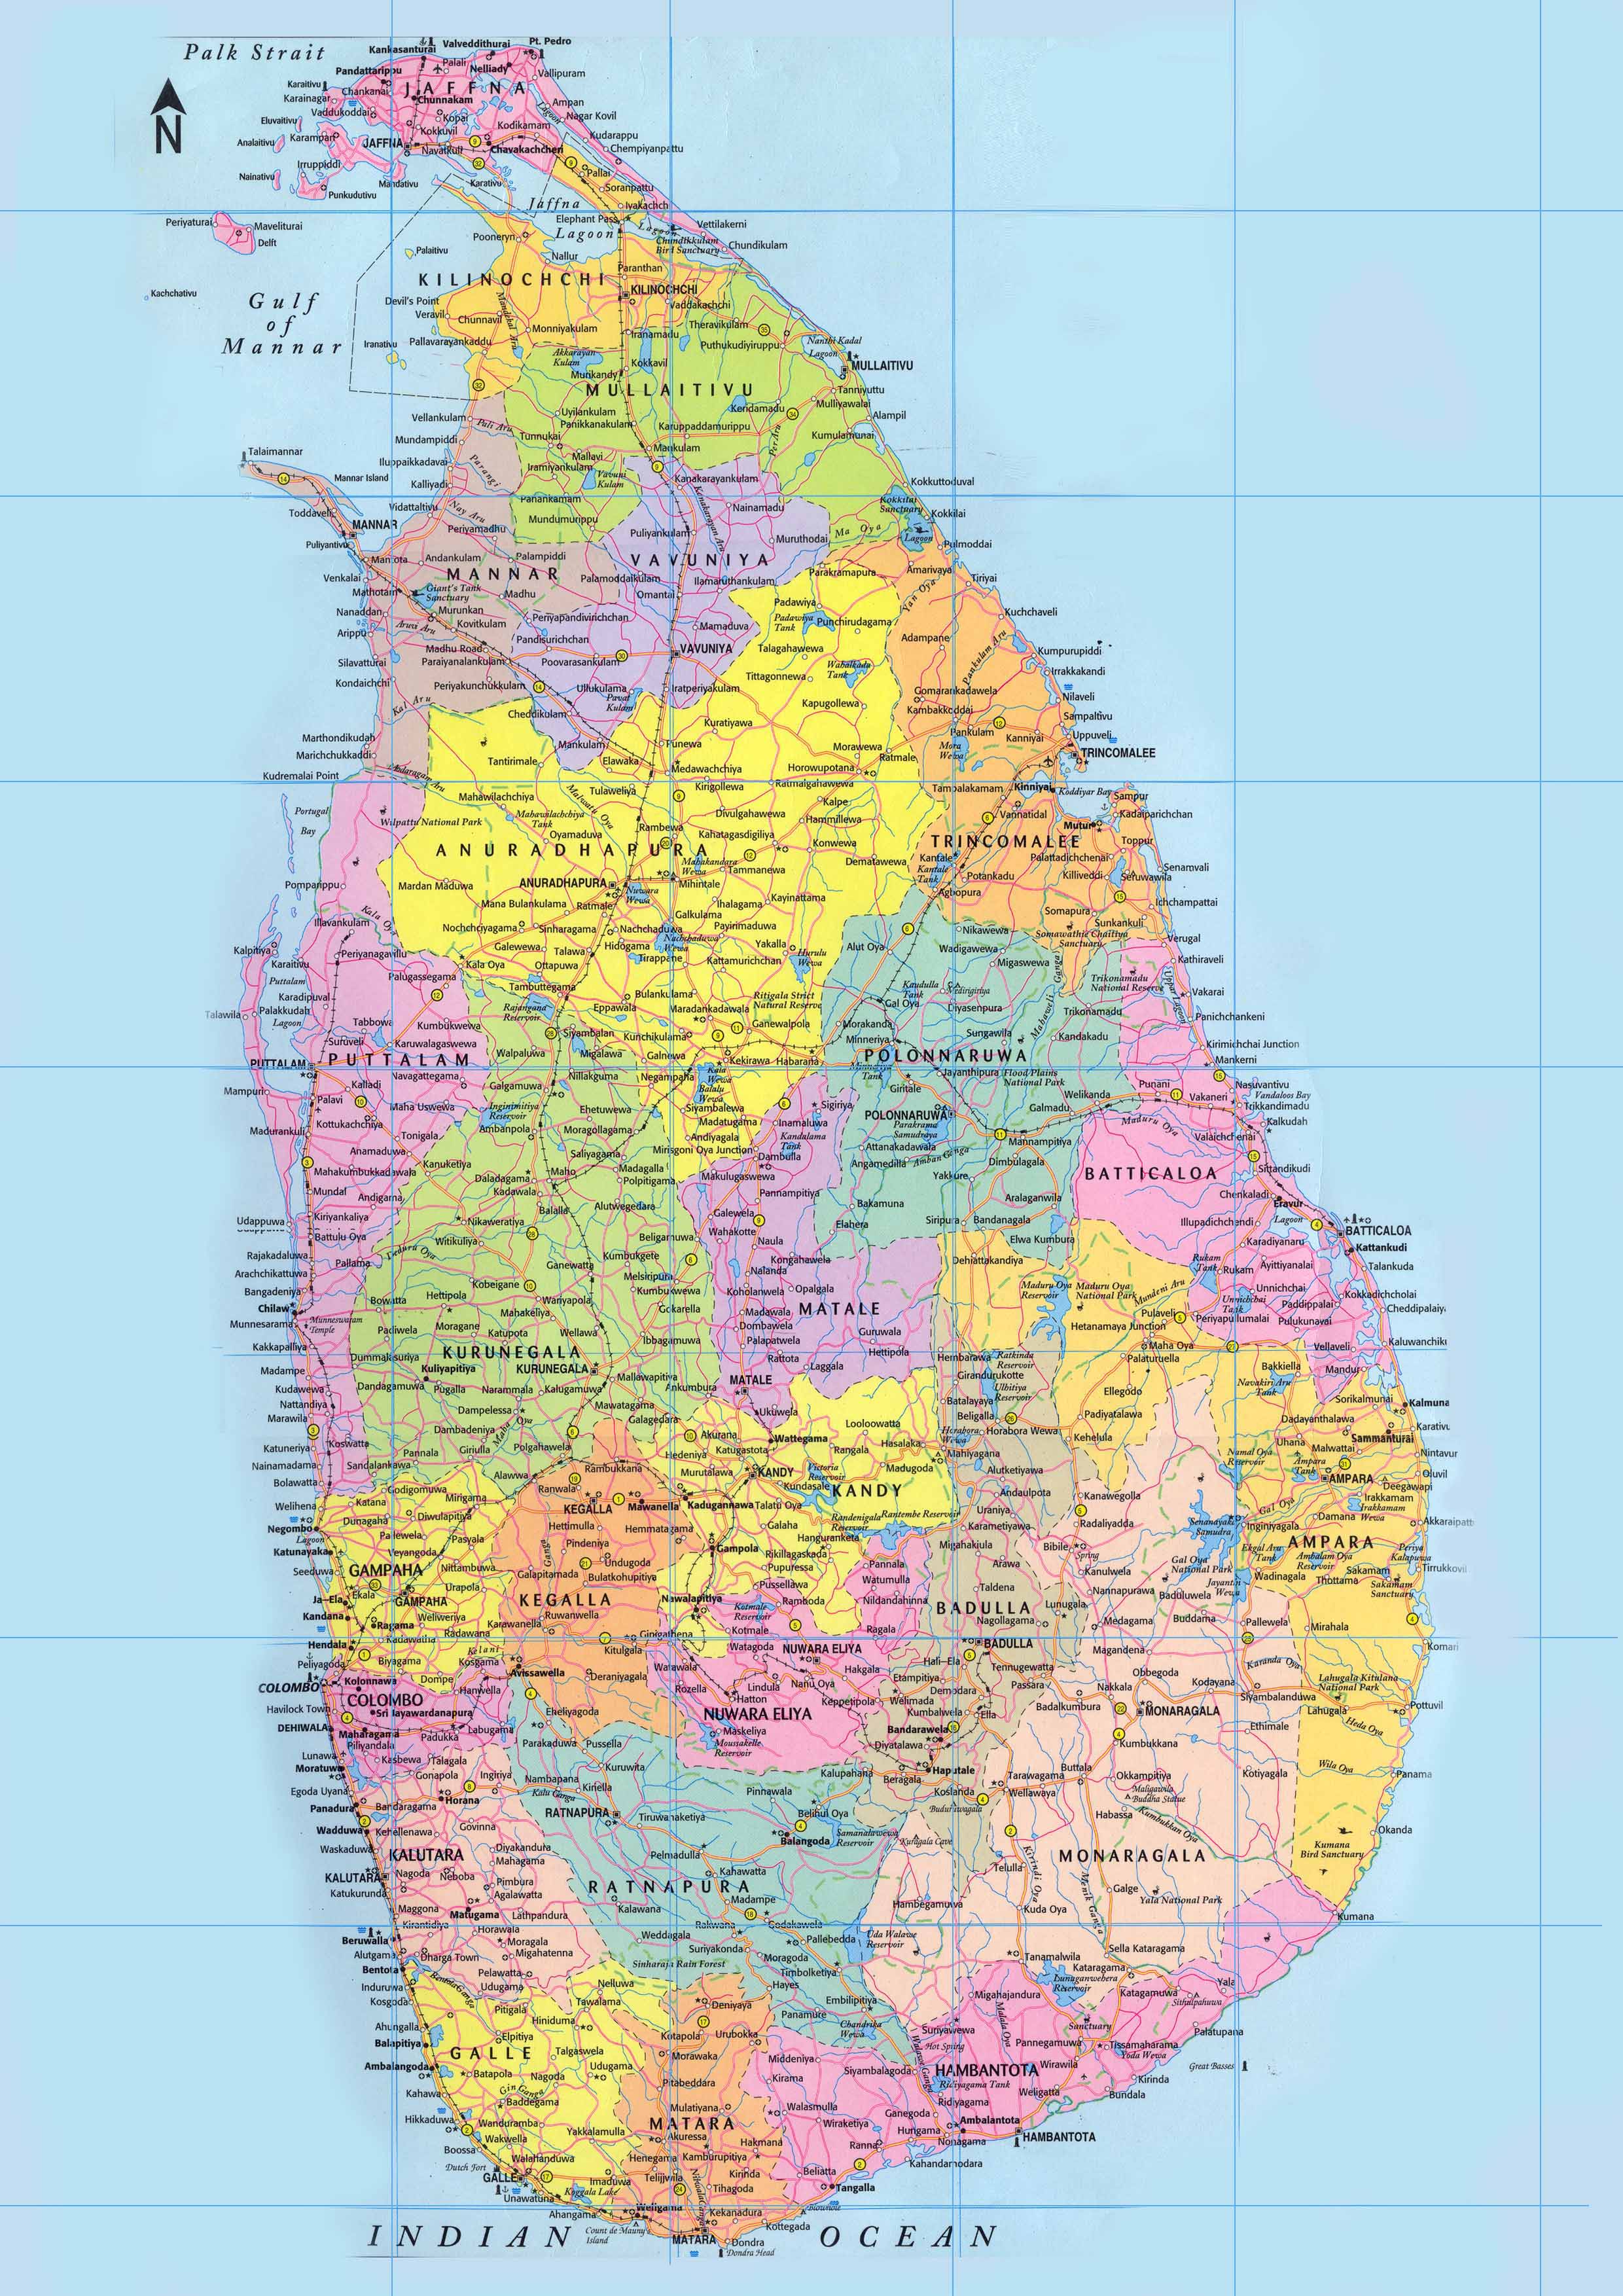 Sri Lanka Travel Guide - Maps